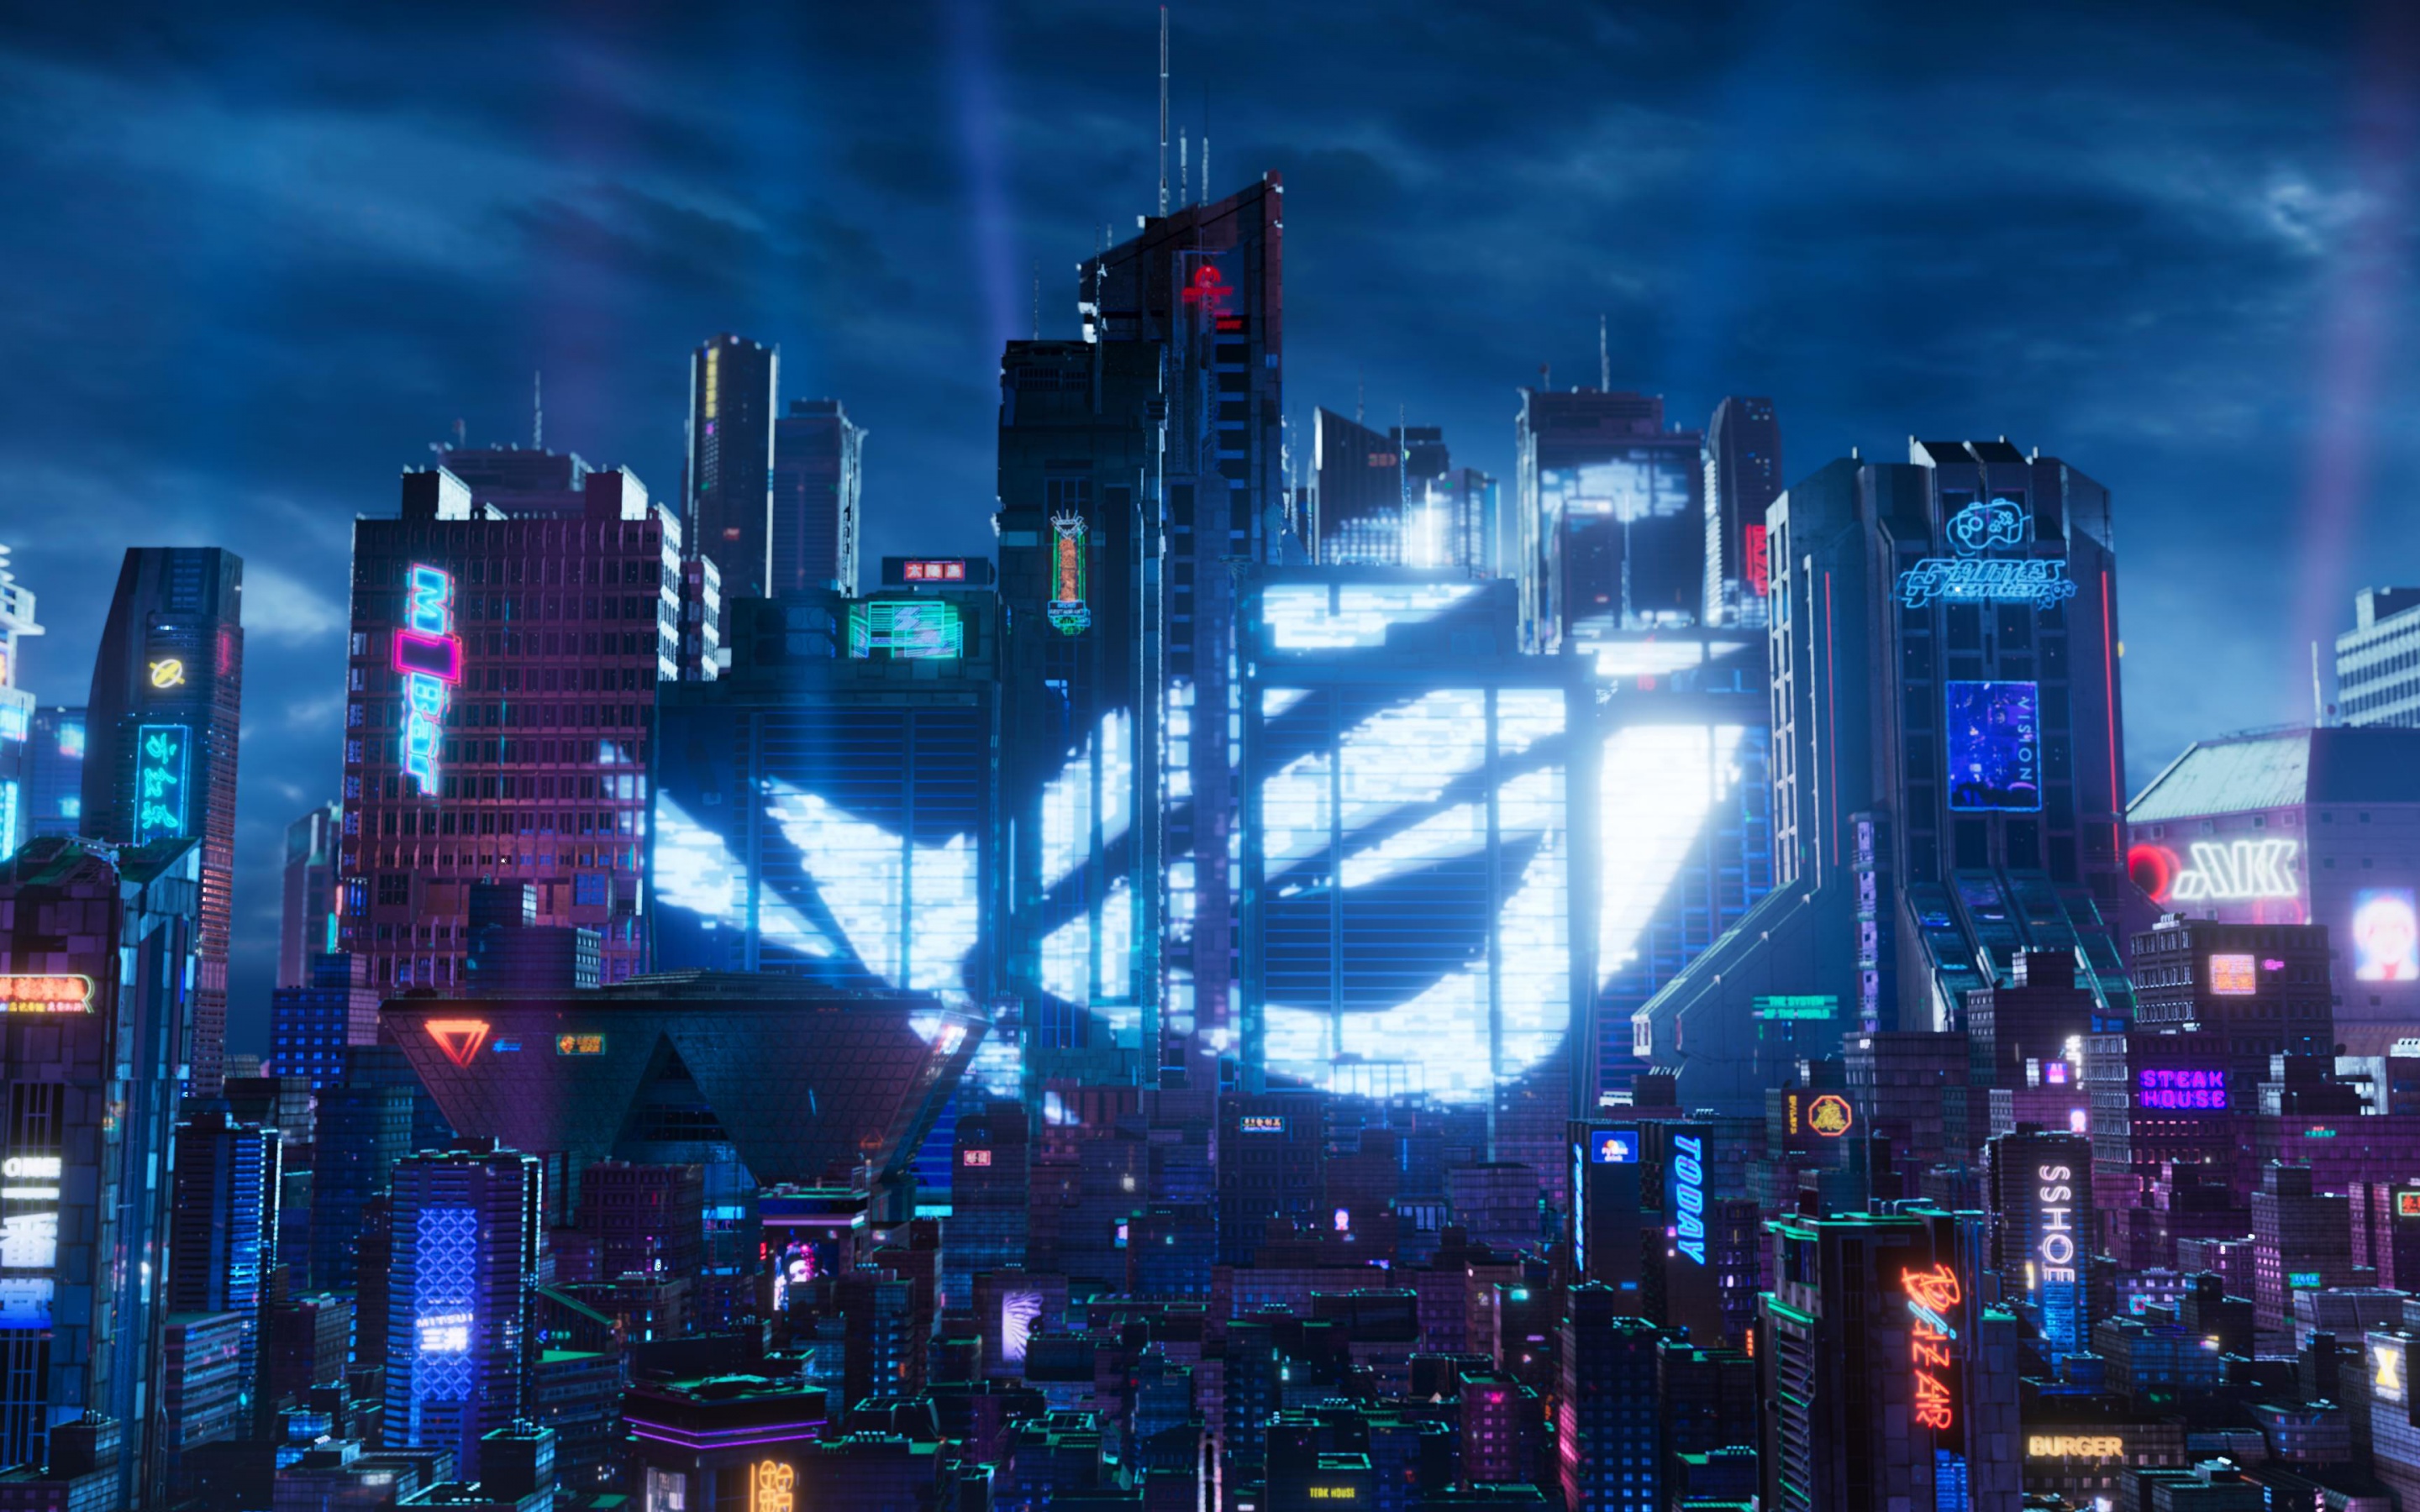 Download Cyberpunk City - A City With A Futuristic City Wallpaper